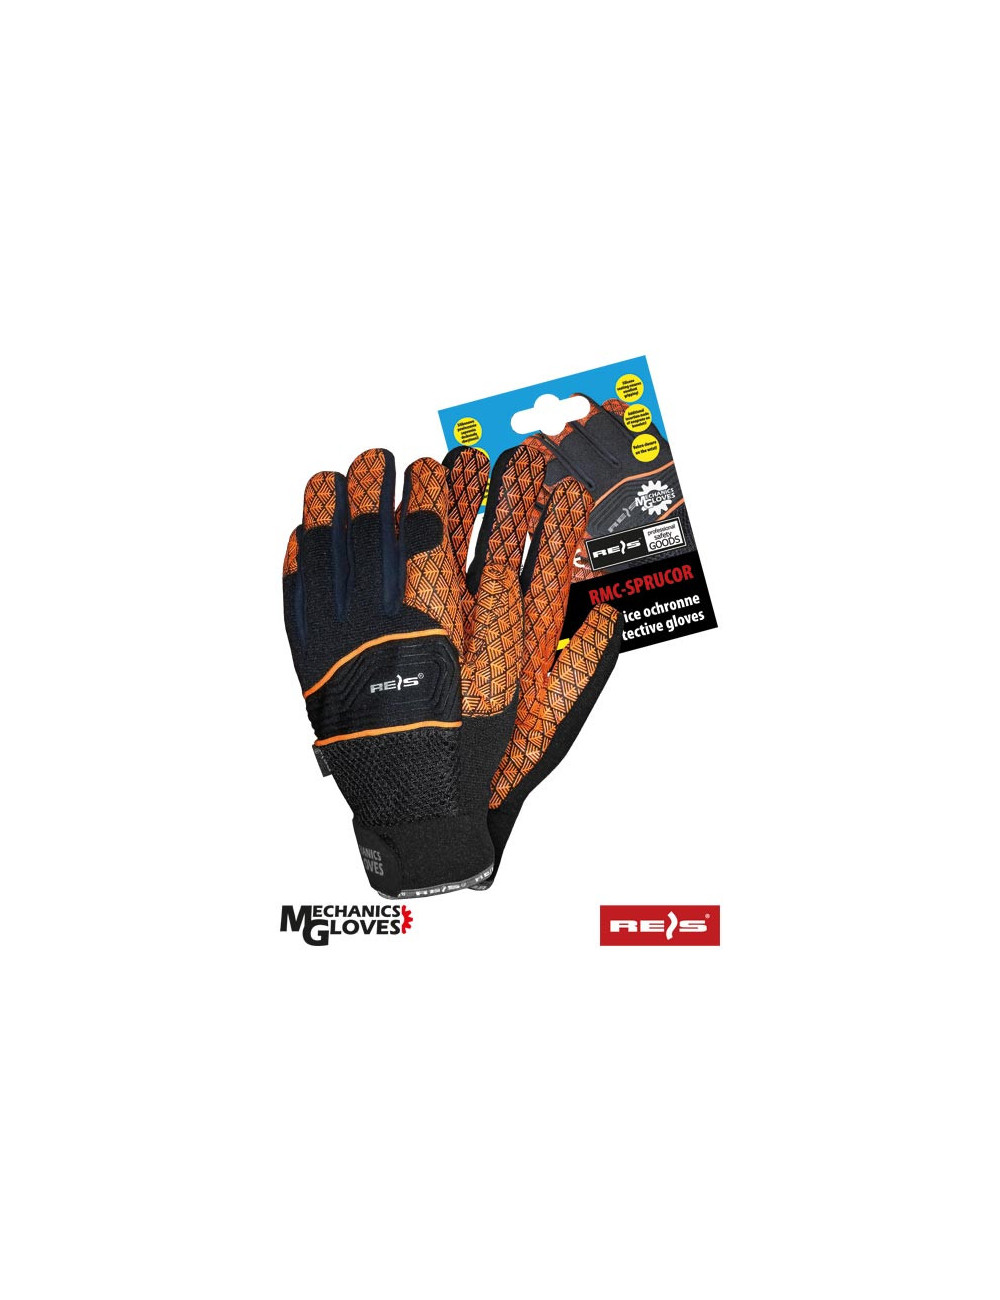 Protective gloves rmc-sprucor bpg black-orange-navy Reis